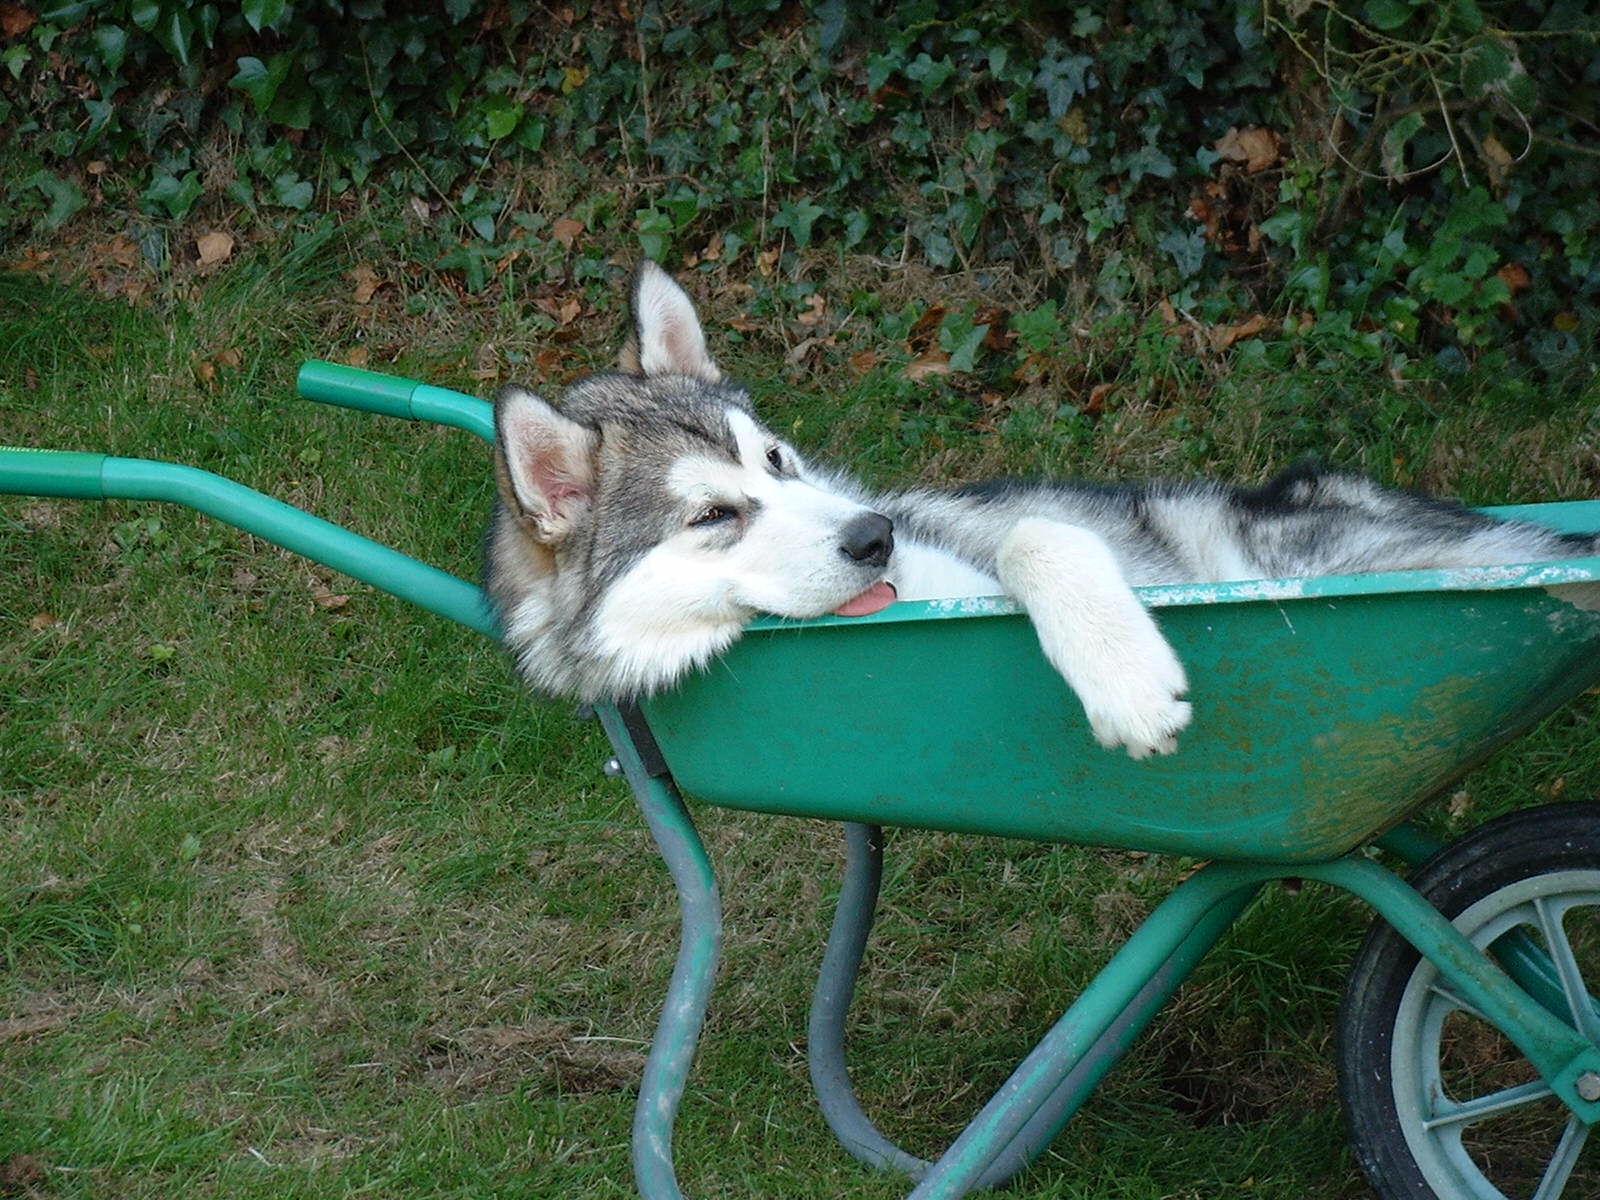 Kodiak, helping with the gardening